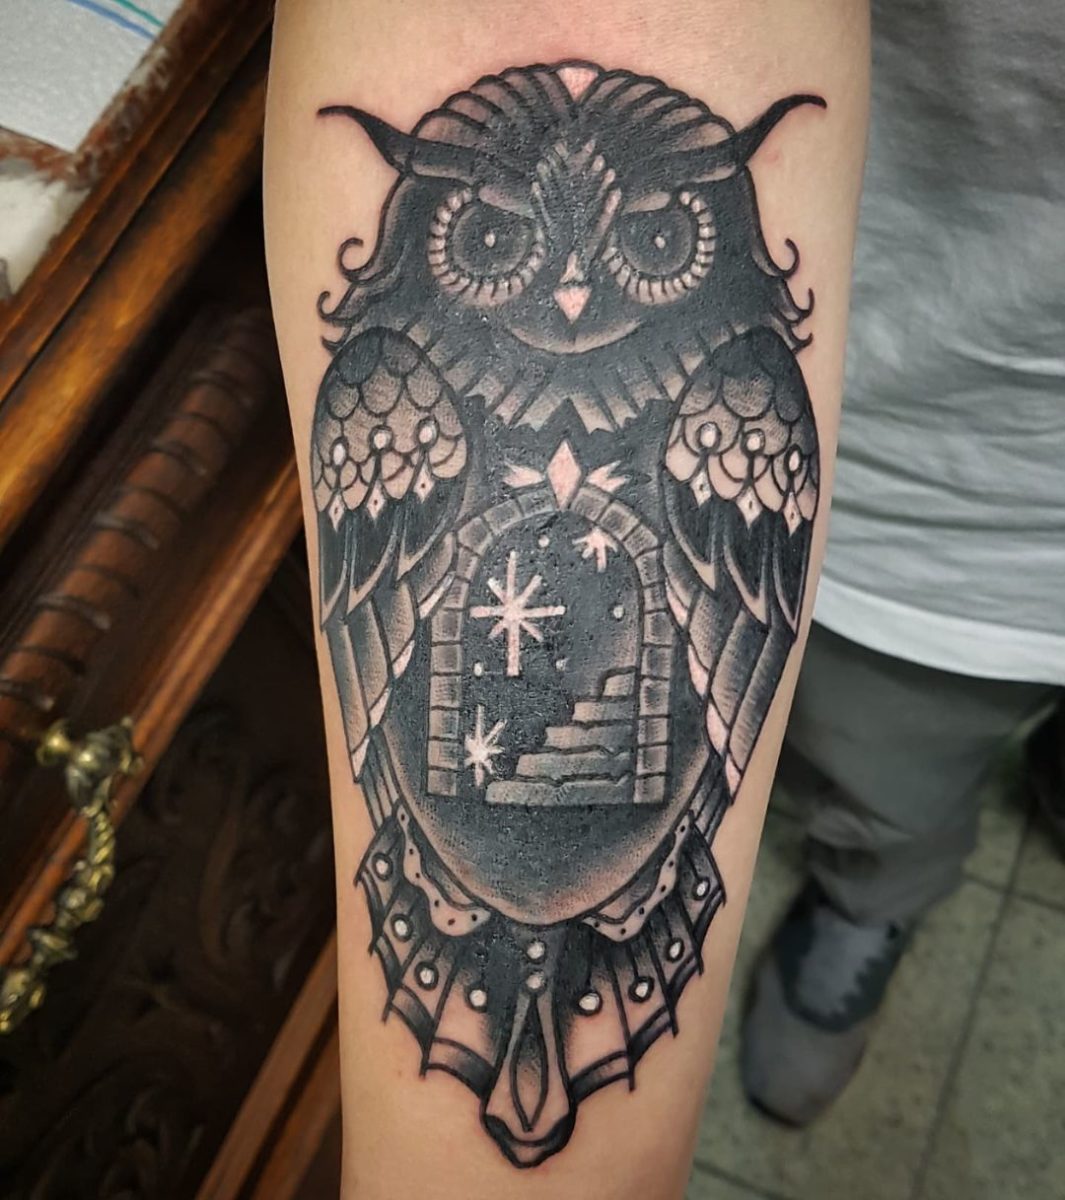 creative owl tattoo ideas that are a hoot